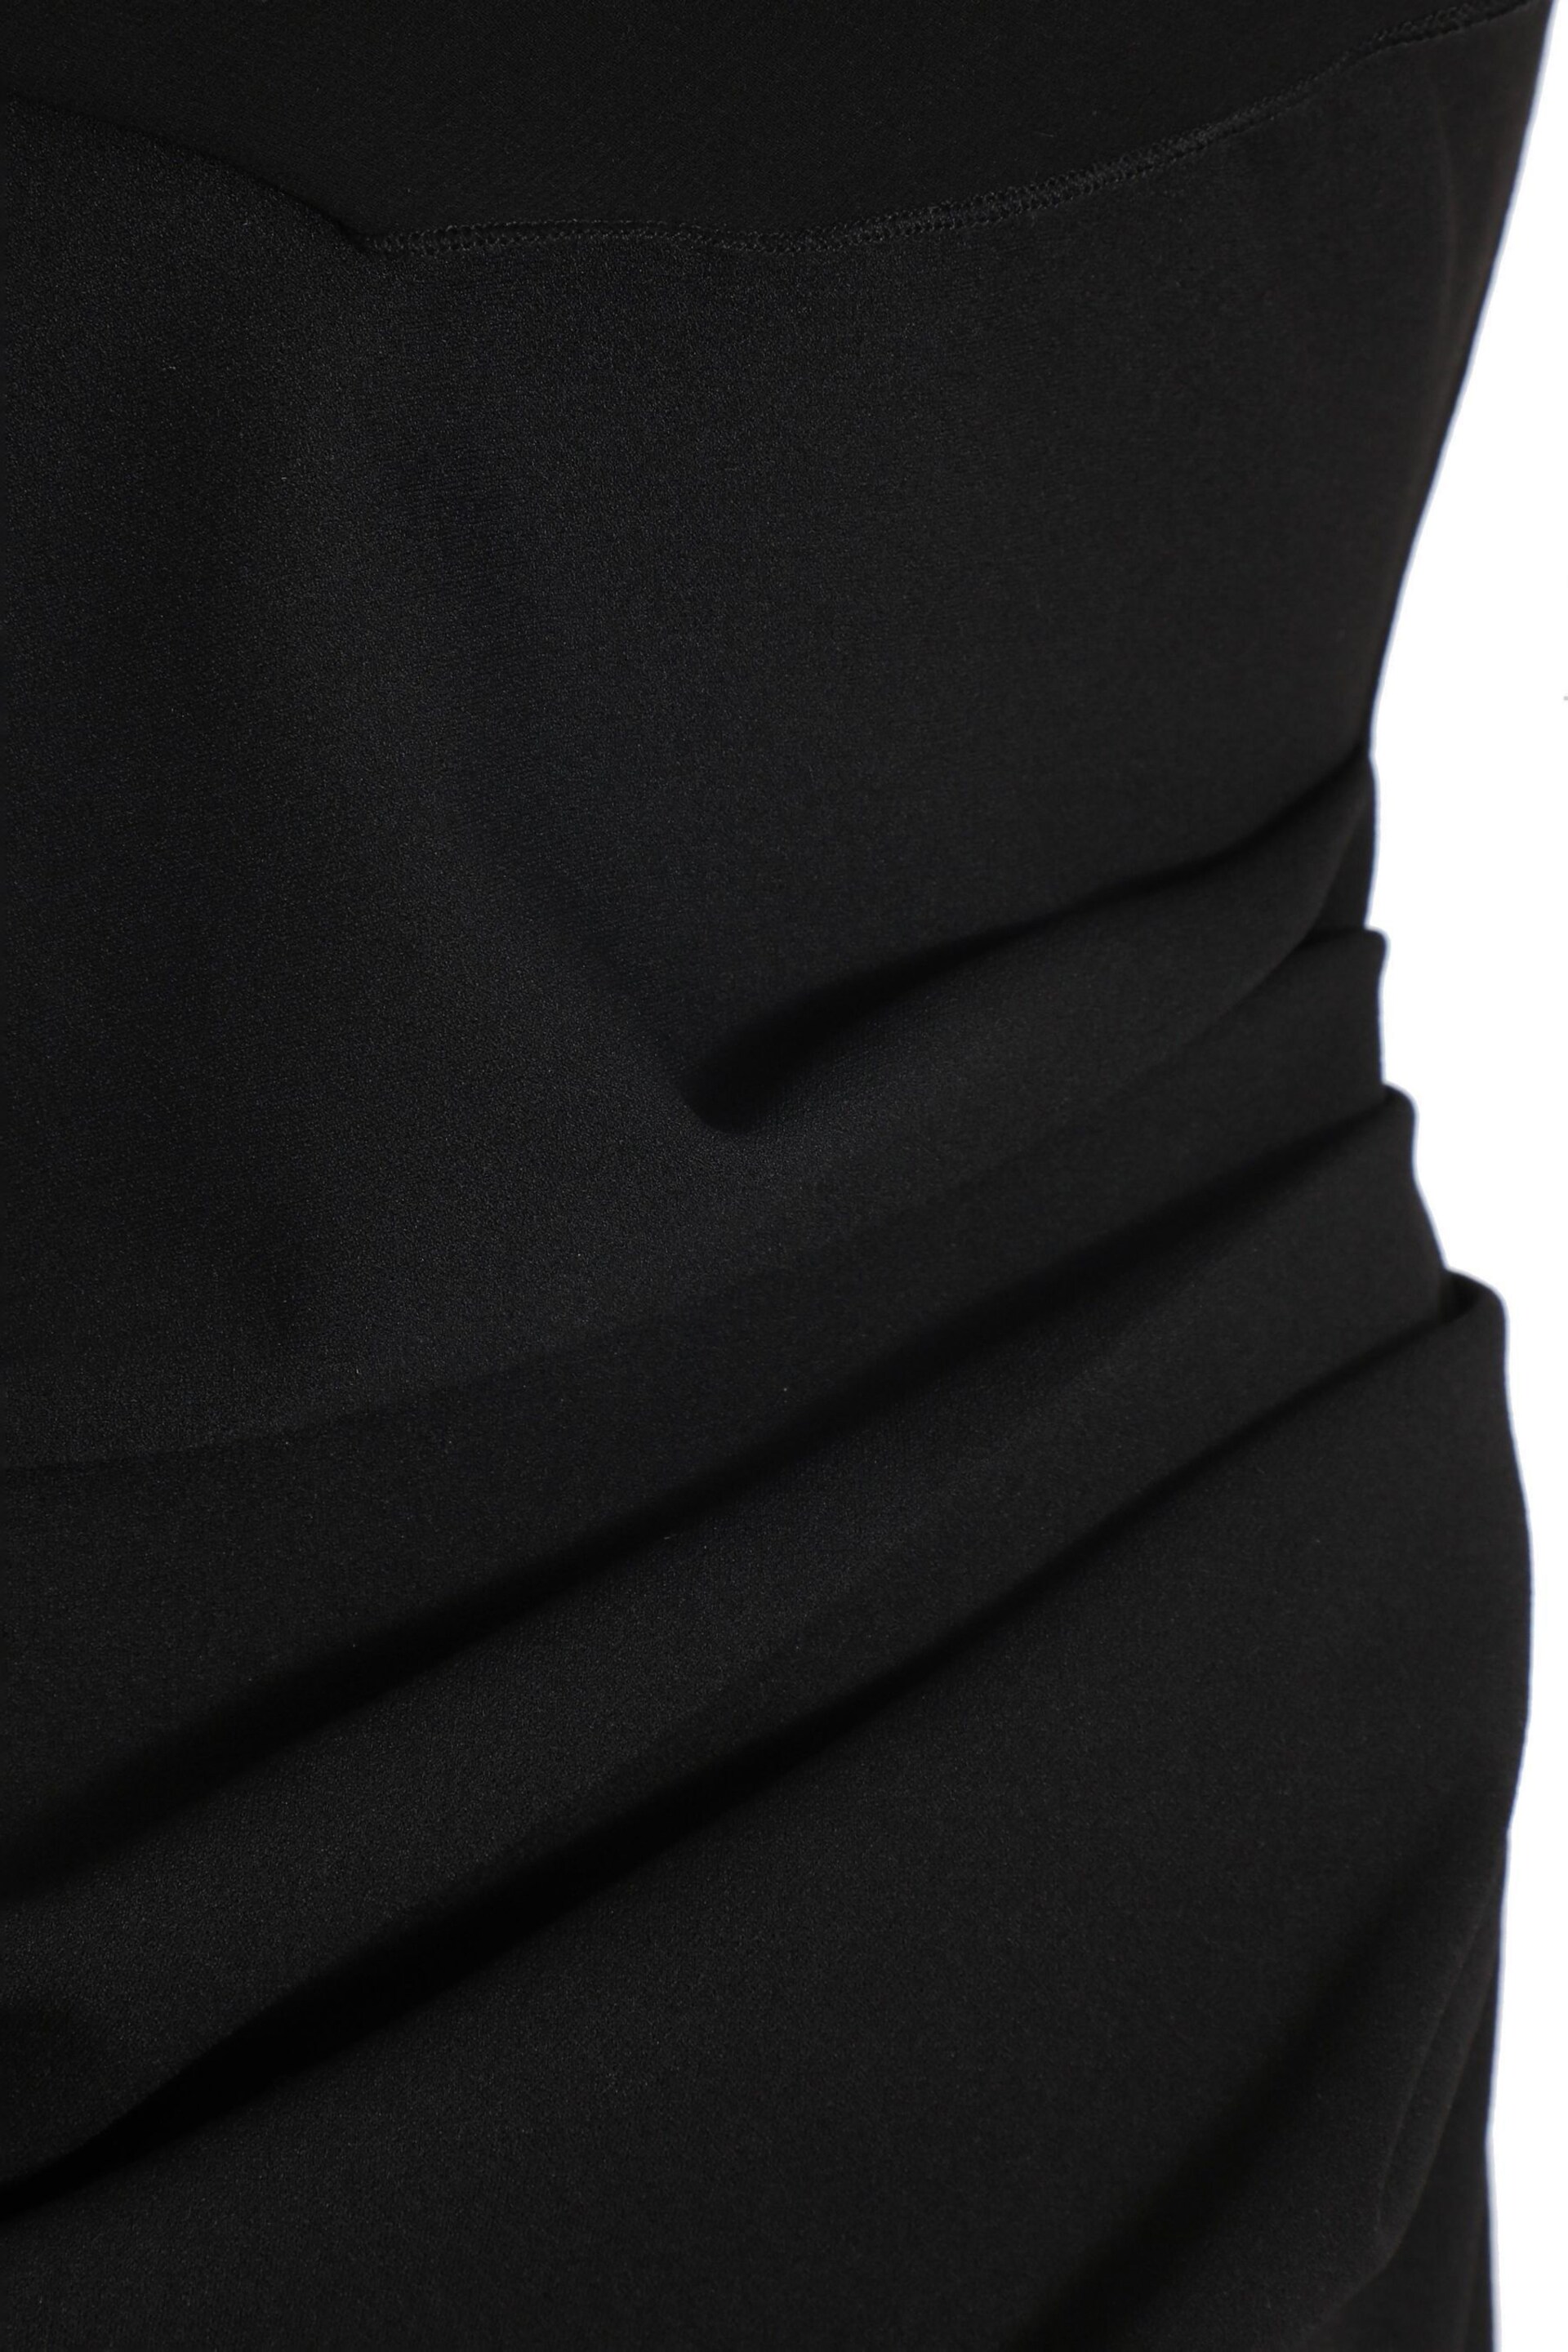 Quiz Black Chiffon Cowl Neck Bridesmaid Maxi Dress - Image 7 of 7